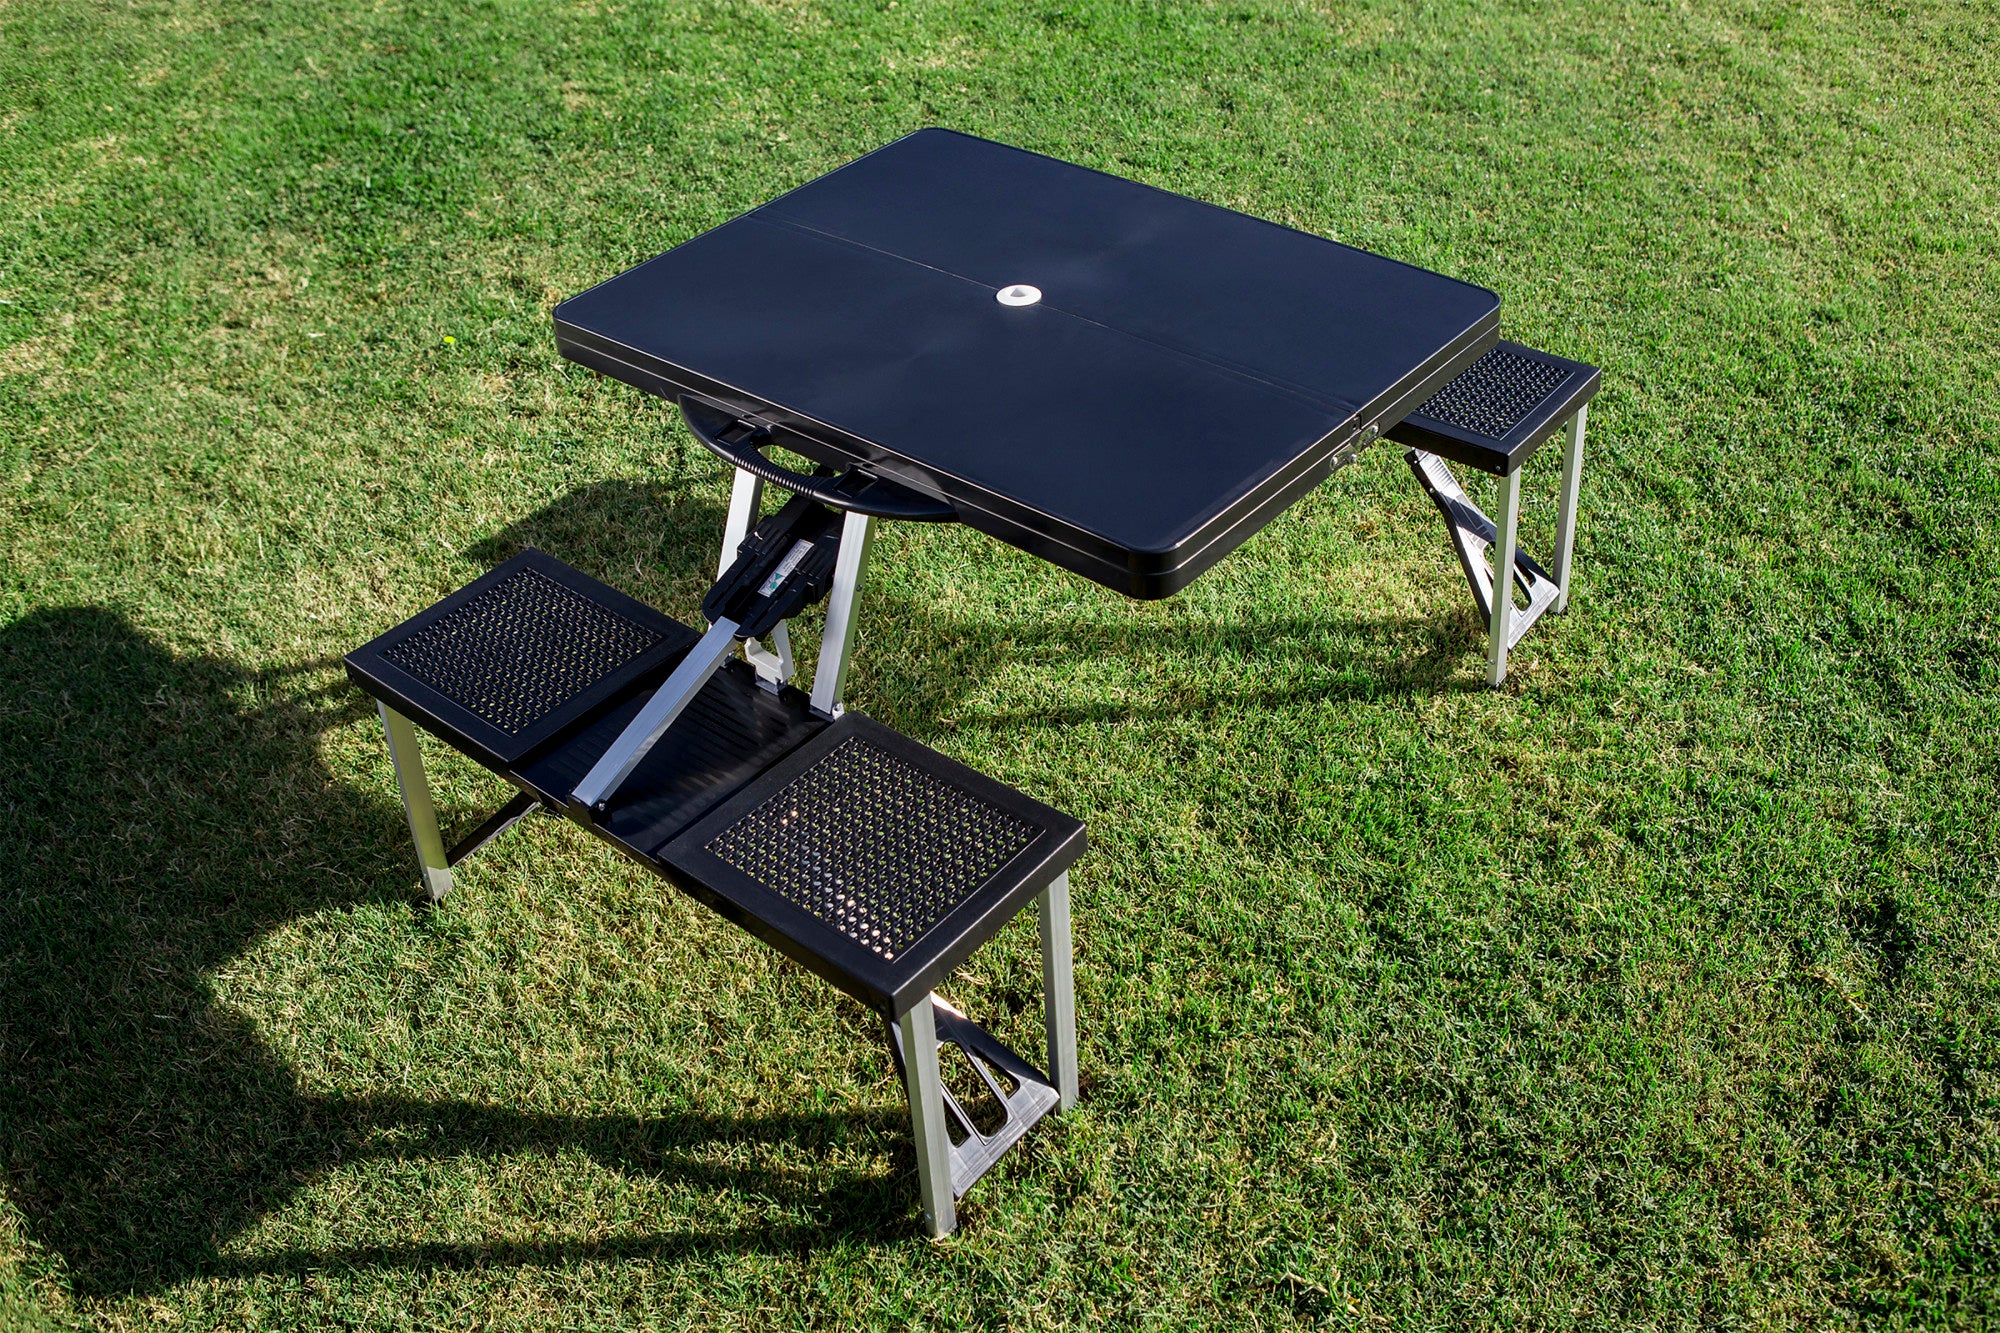 Baseball Diamond - Seattle Mariners - Picnic Table Portable Folding Table with Seats